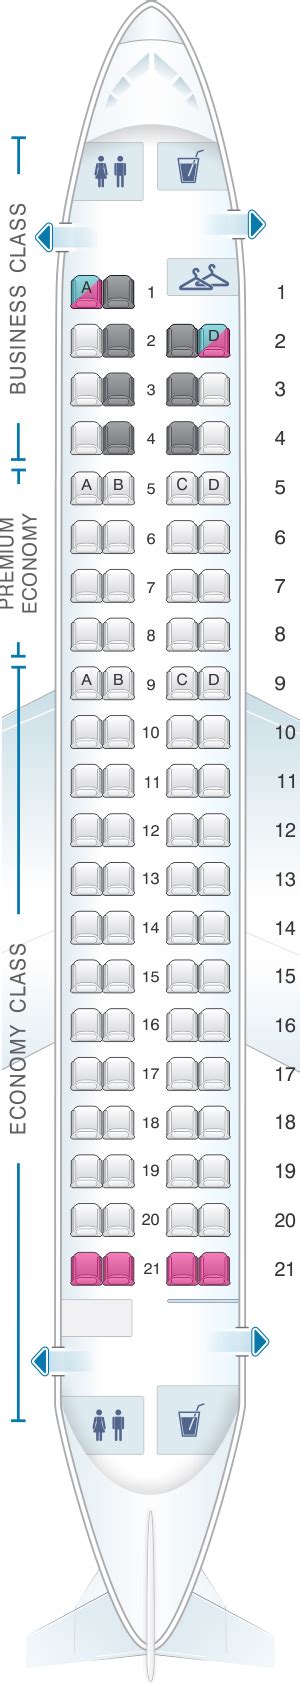 Delta Embraer 190 Seat Map